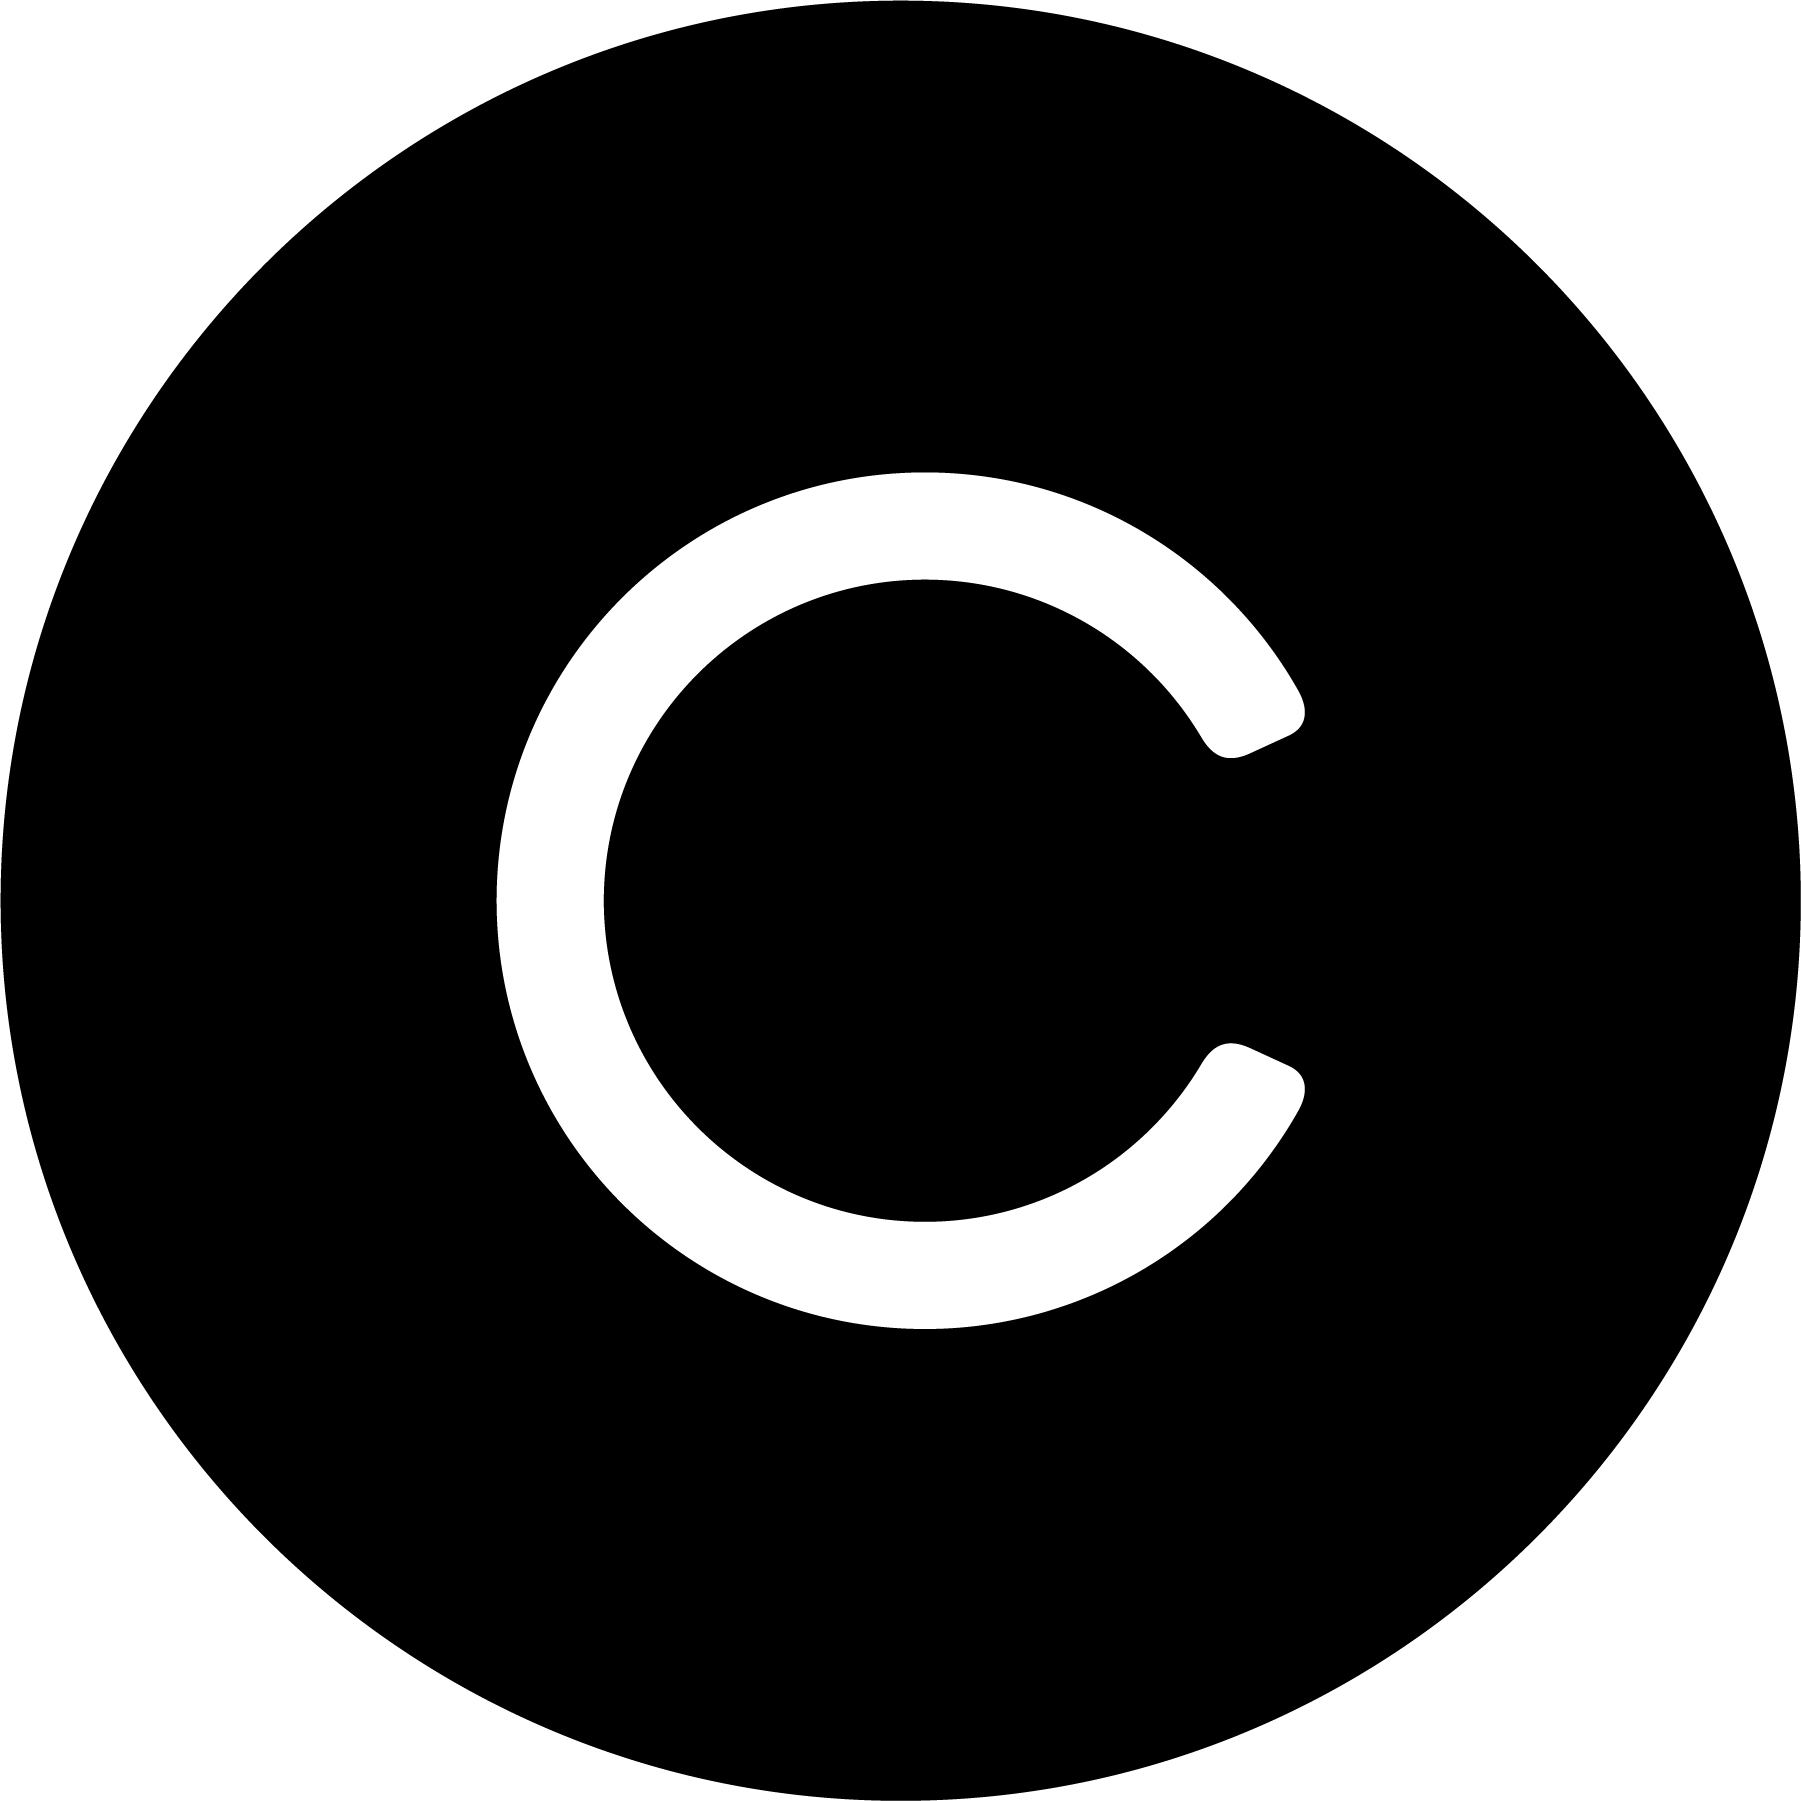 CircleIt logo